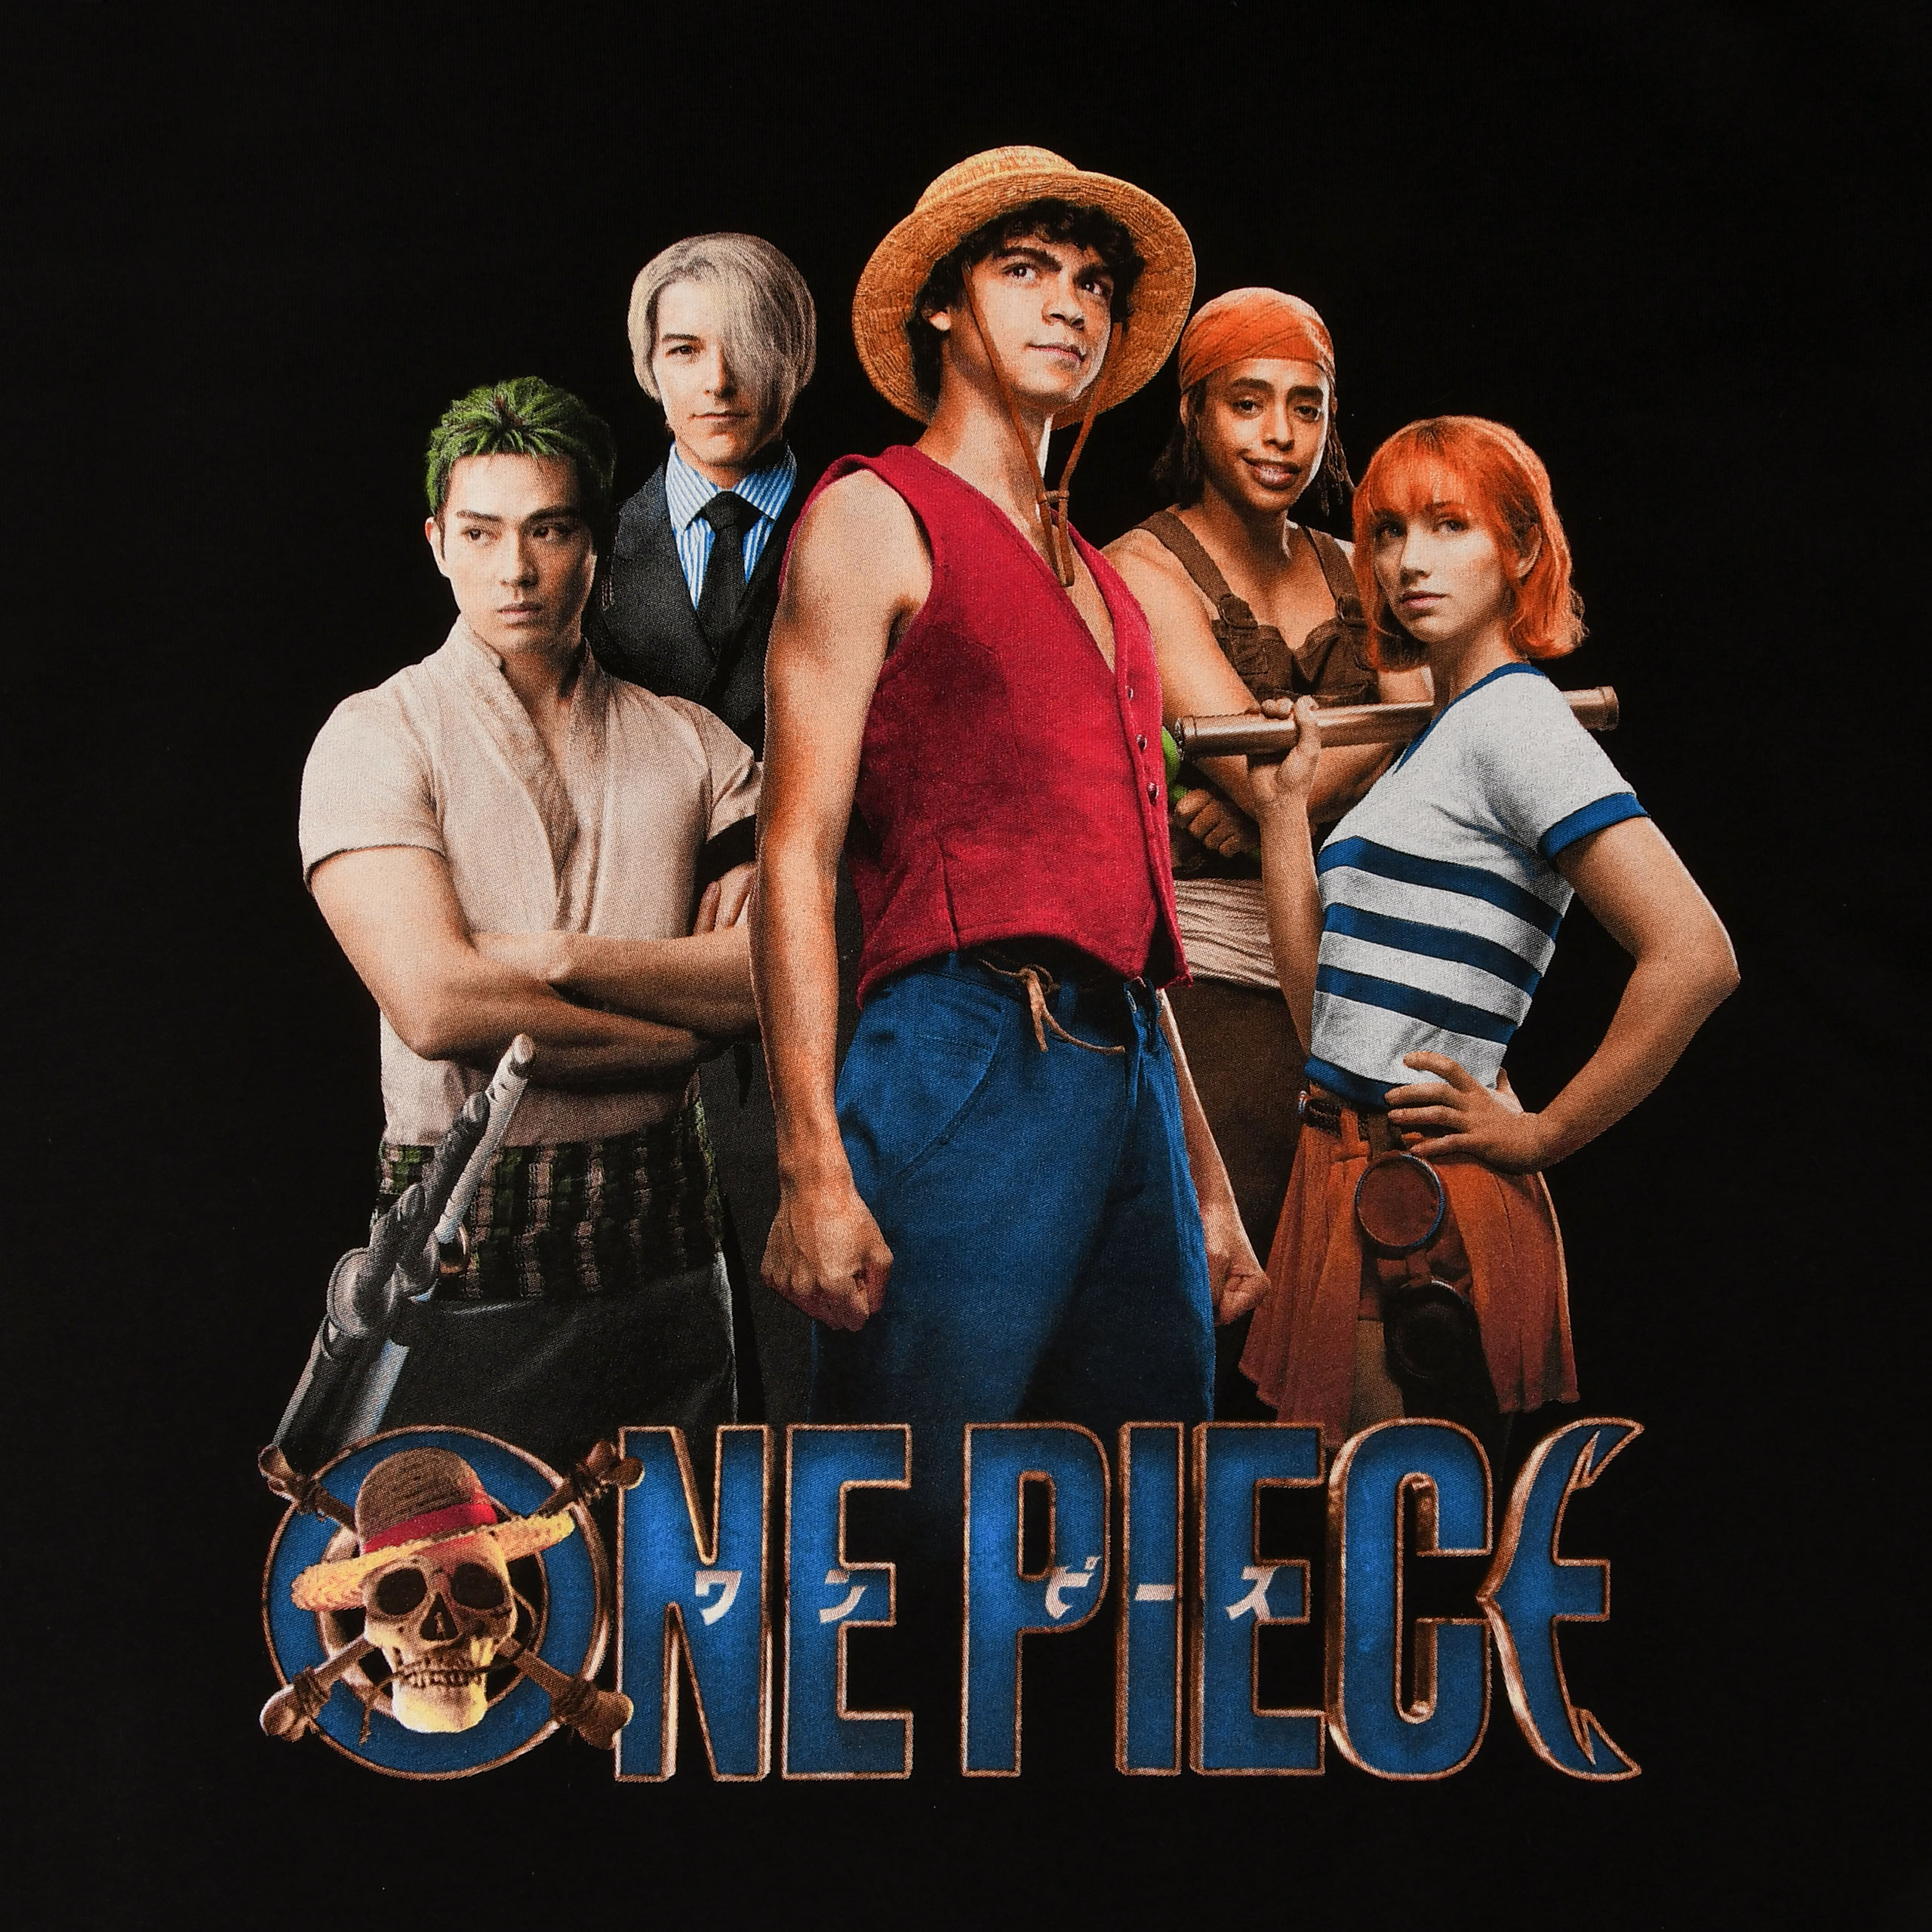 One Piece - Crew T-Shirt Black